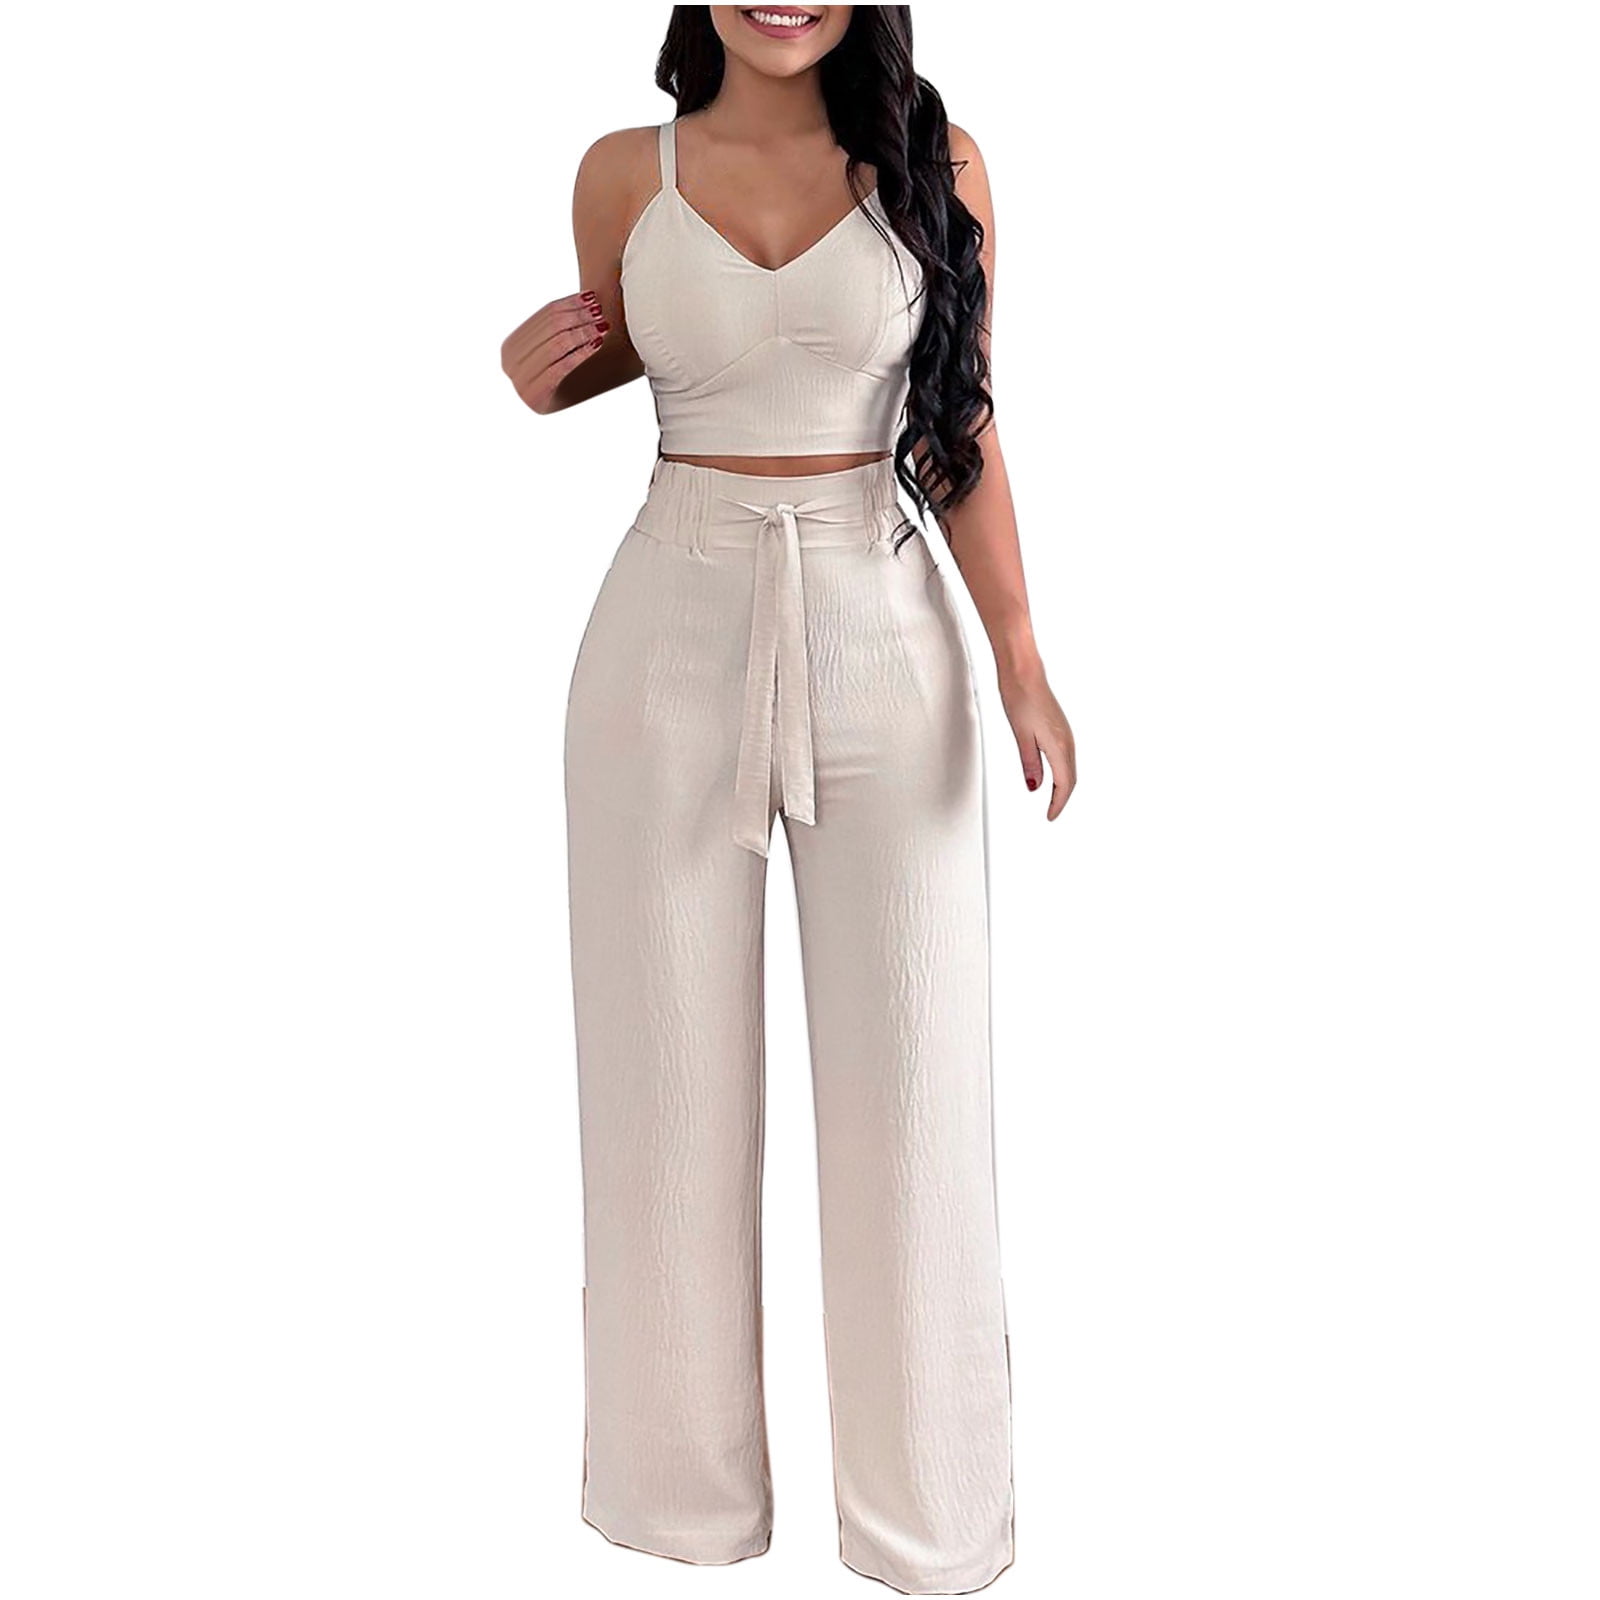 Shop women two piece pant and top set online - Wevez